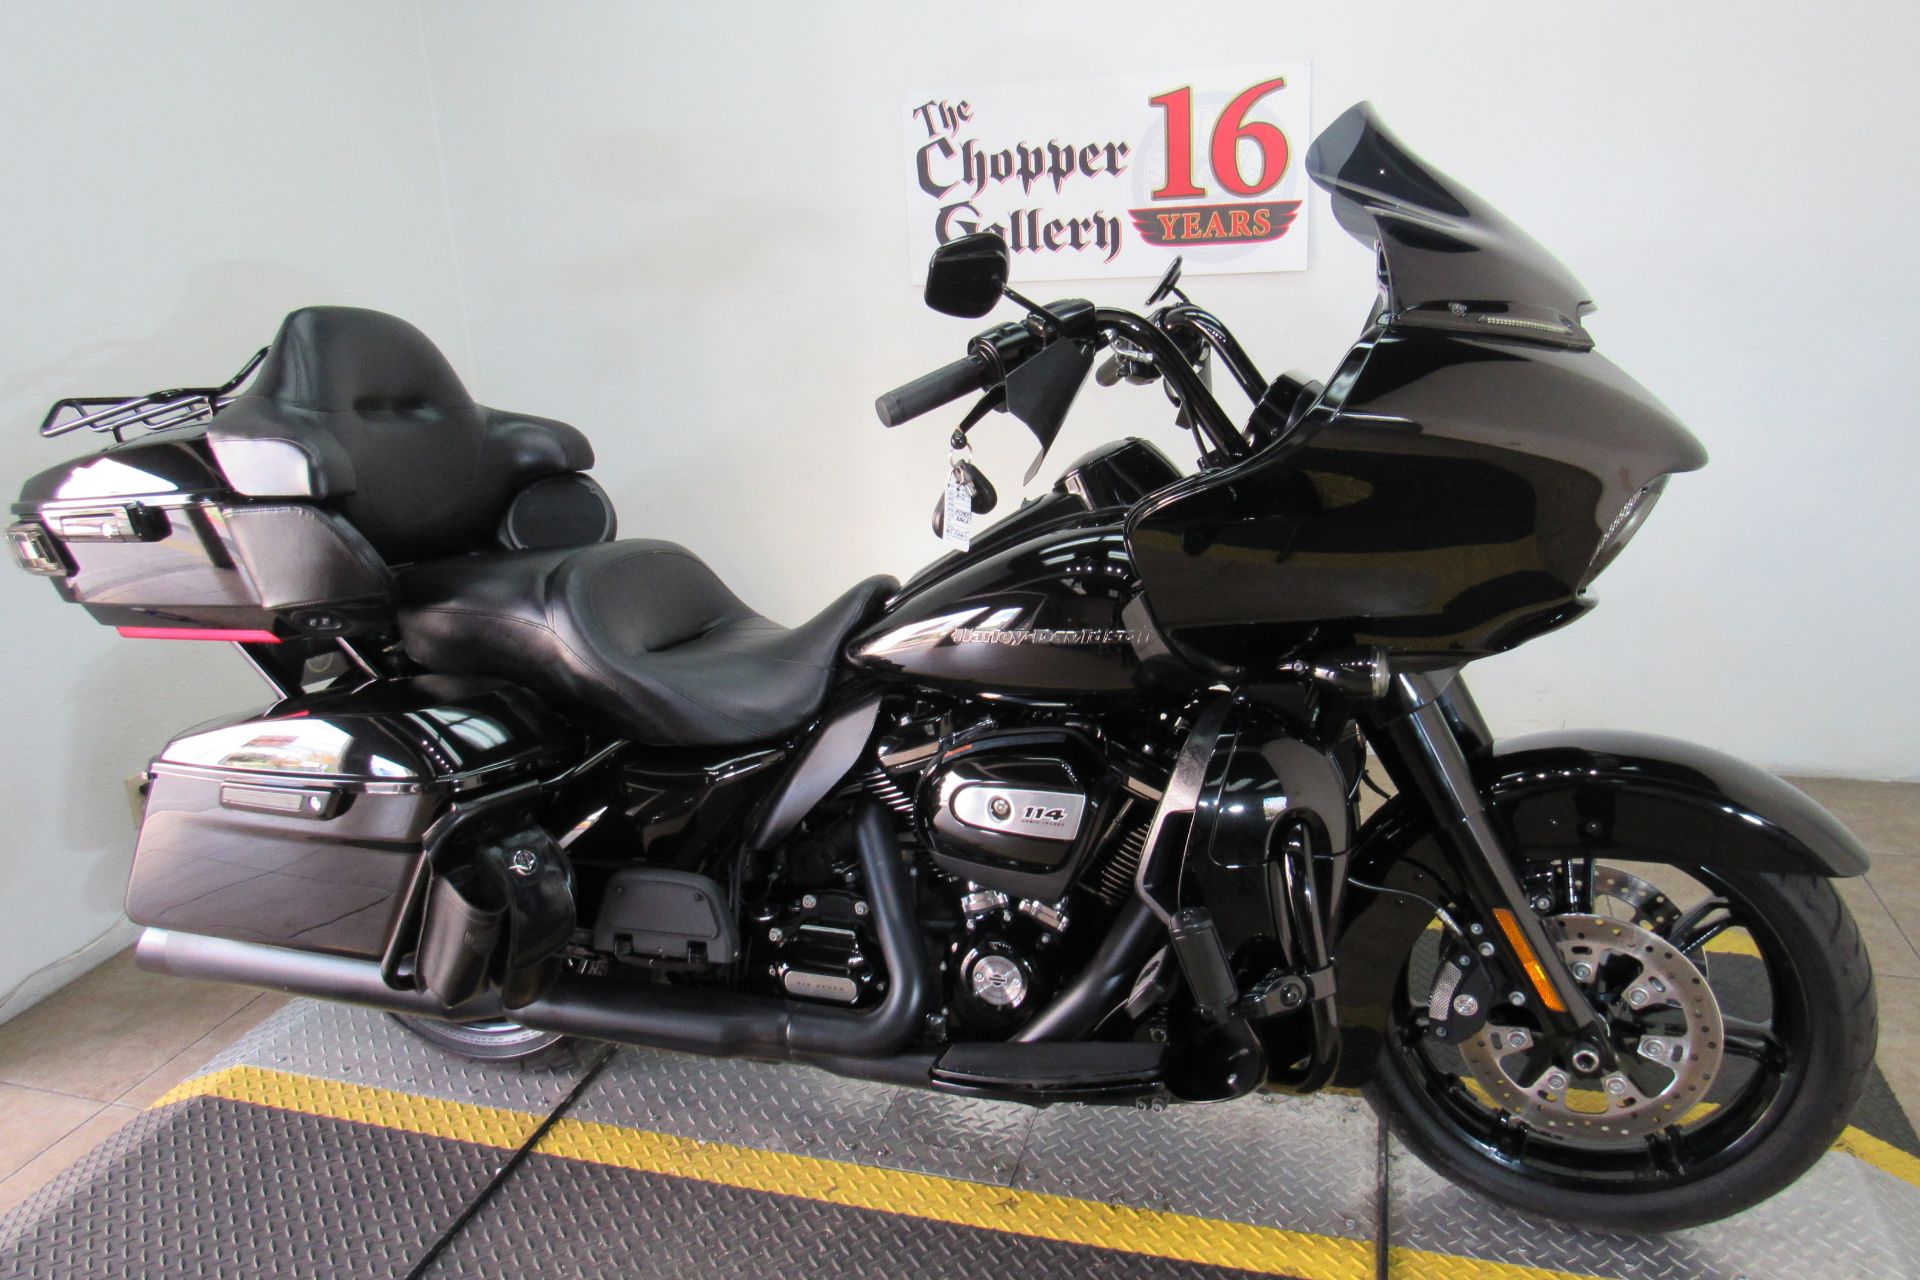 2020 Harley-Davidson Road Glide® Limited in Temecula, California - Photo 6